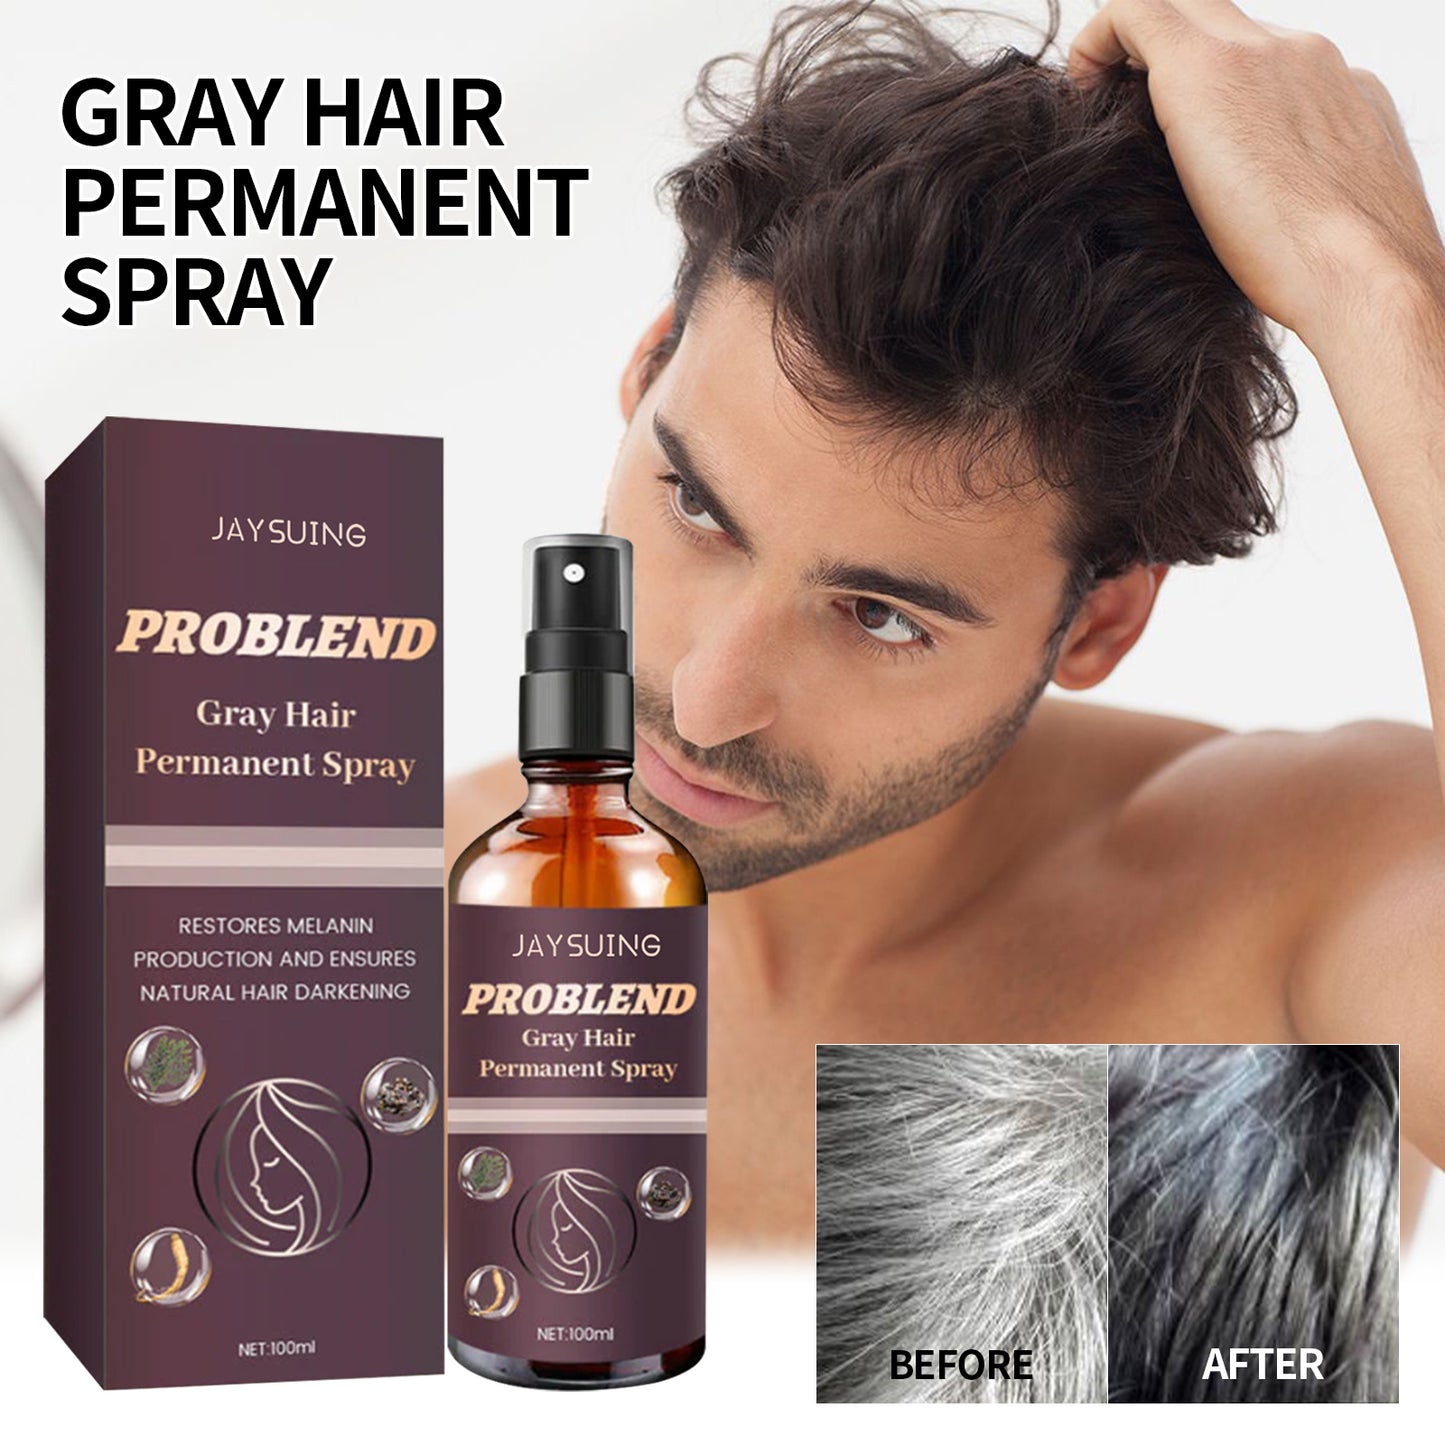 Gray Hair Permanent Spray